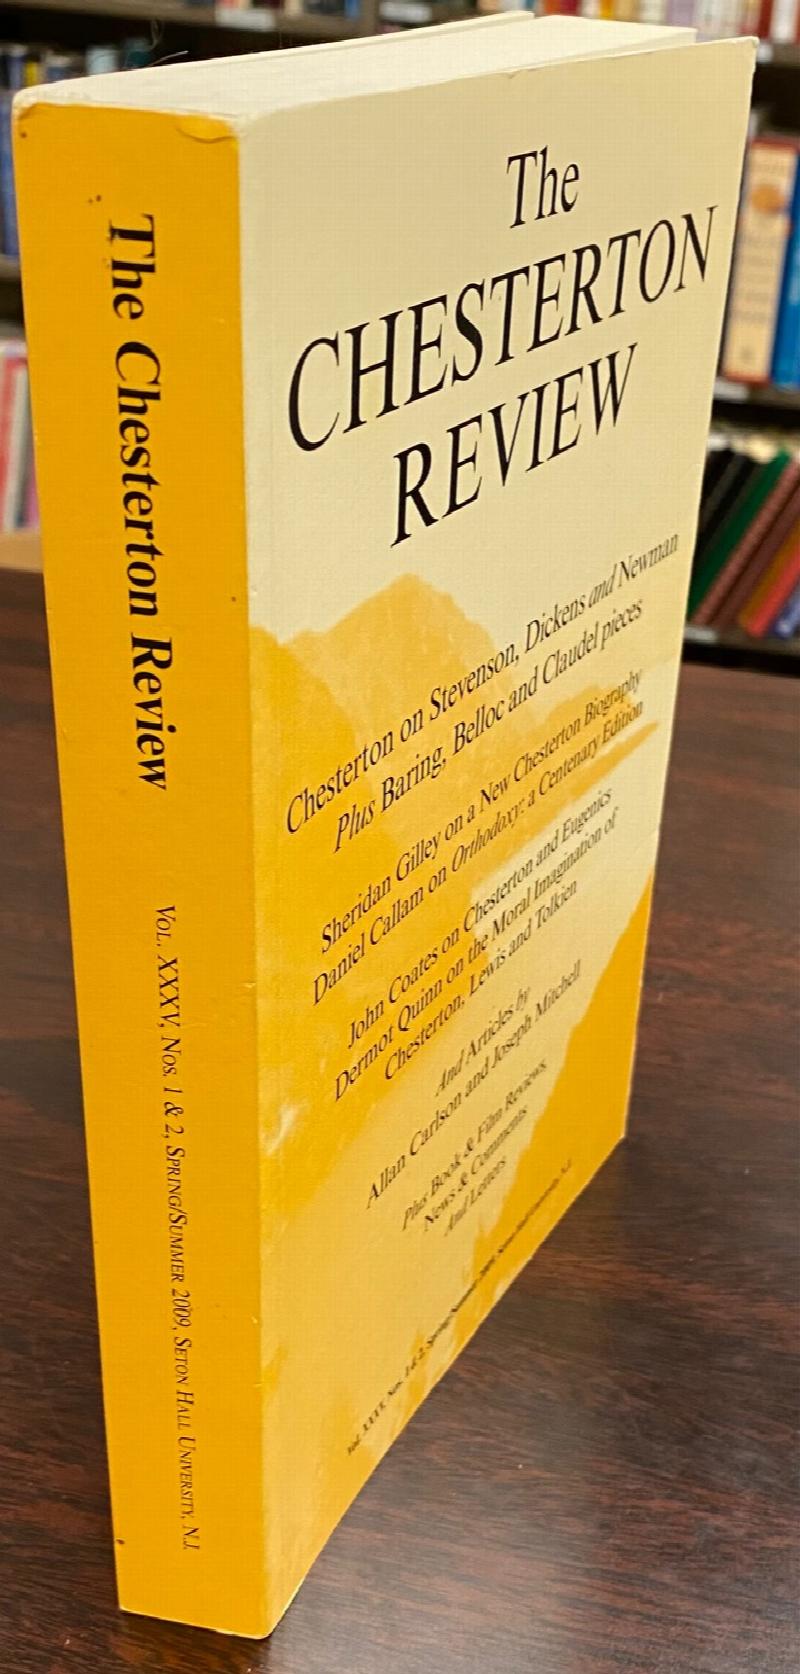 The Chesterton Review (Vol. XXXV No. 1 & 2, SpringSummer 2009)